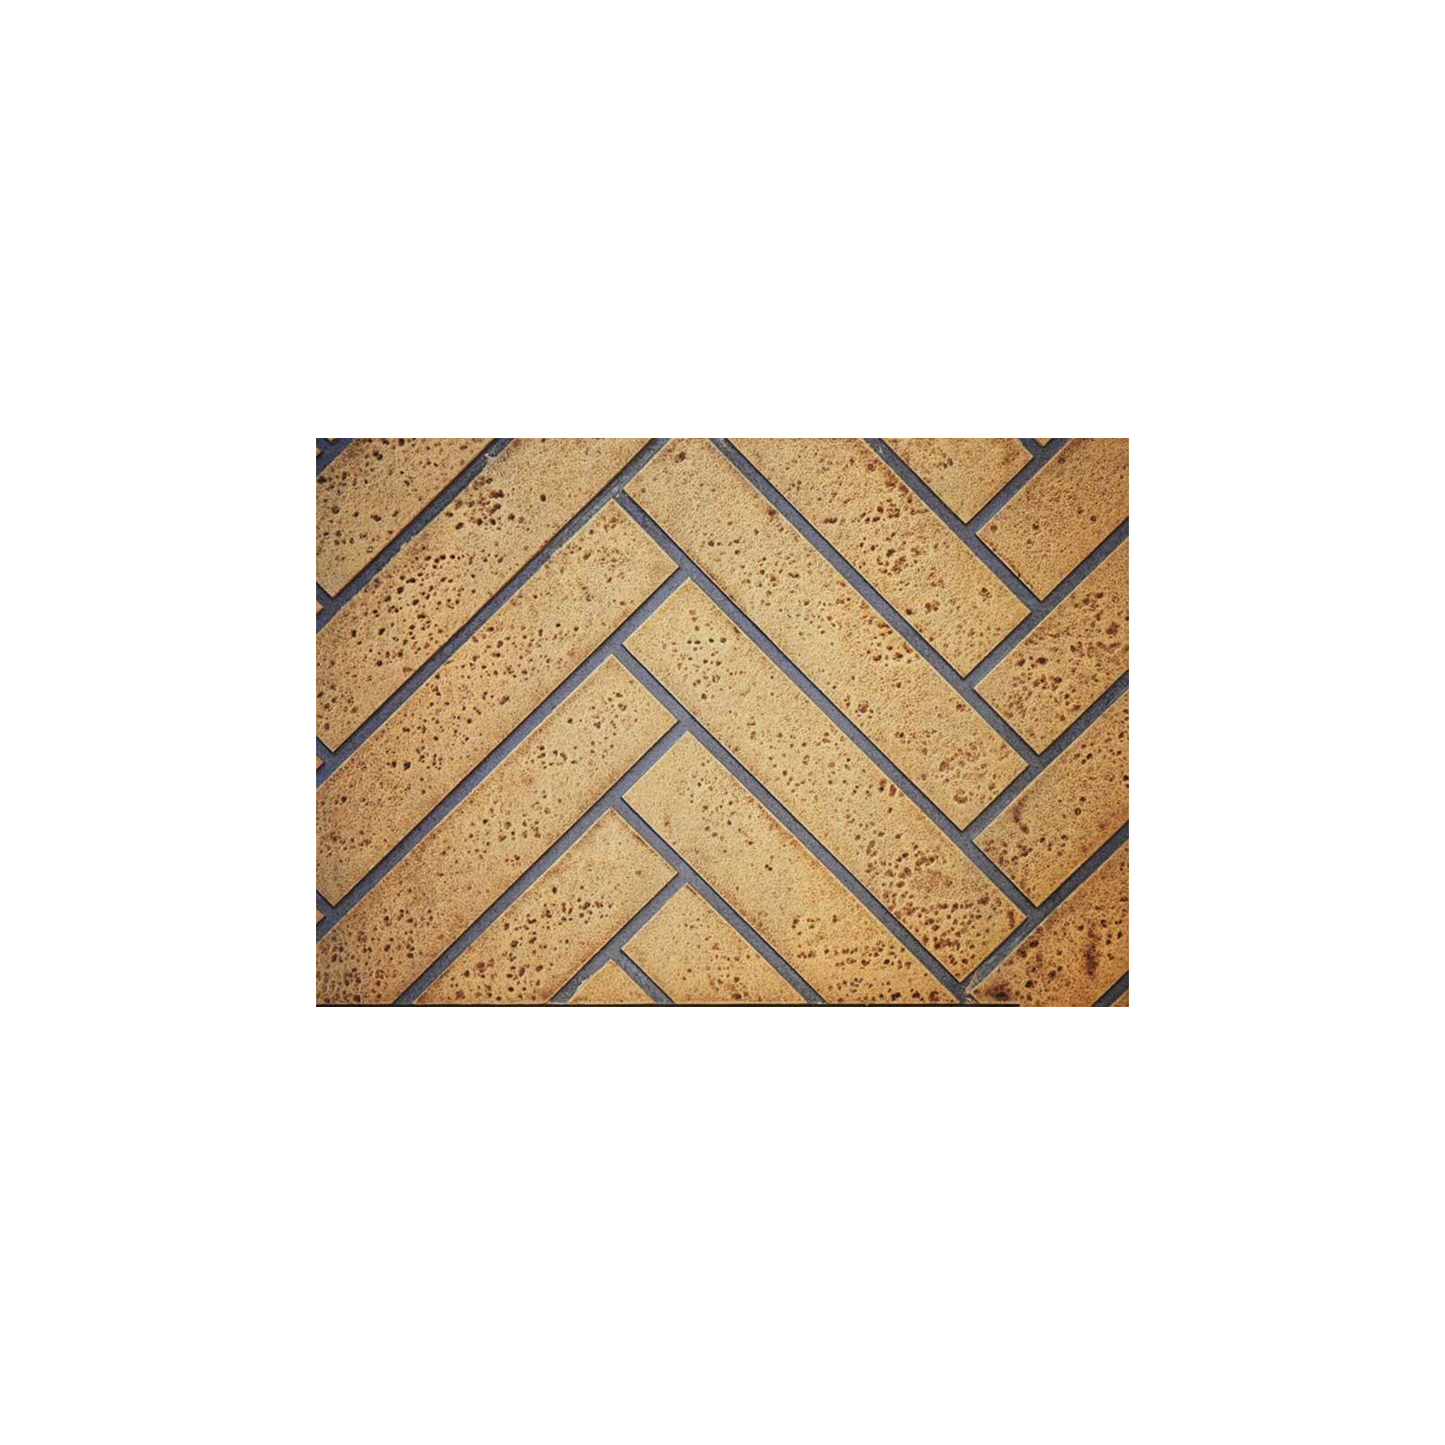 Napoleon Herringbone Decorative Brick Panels - GD865KT